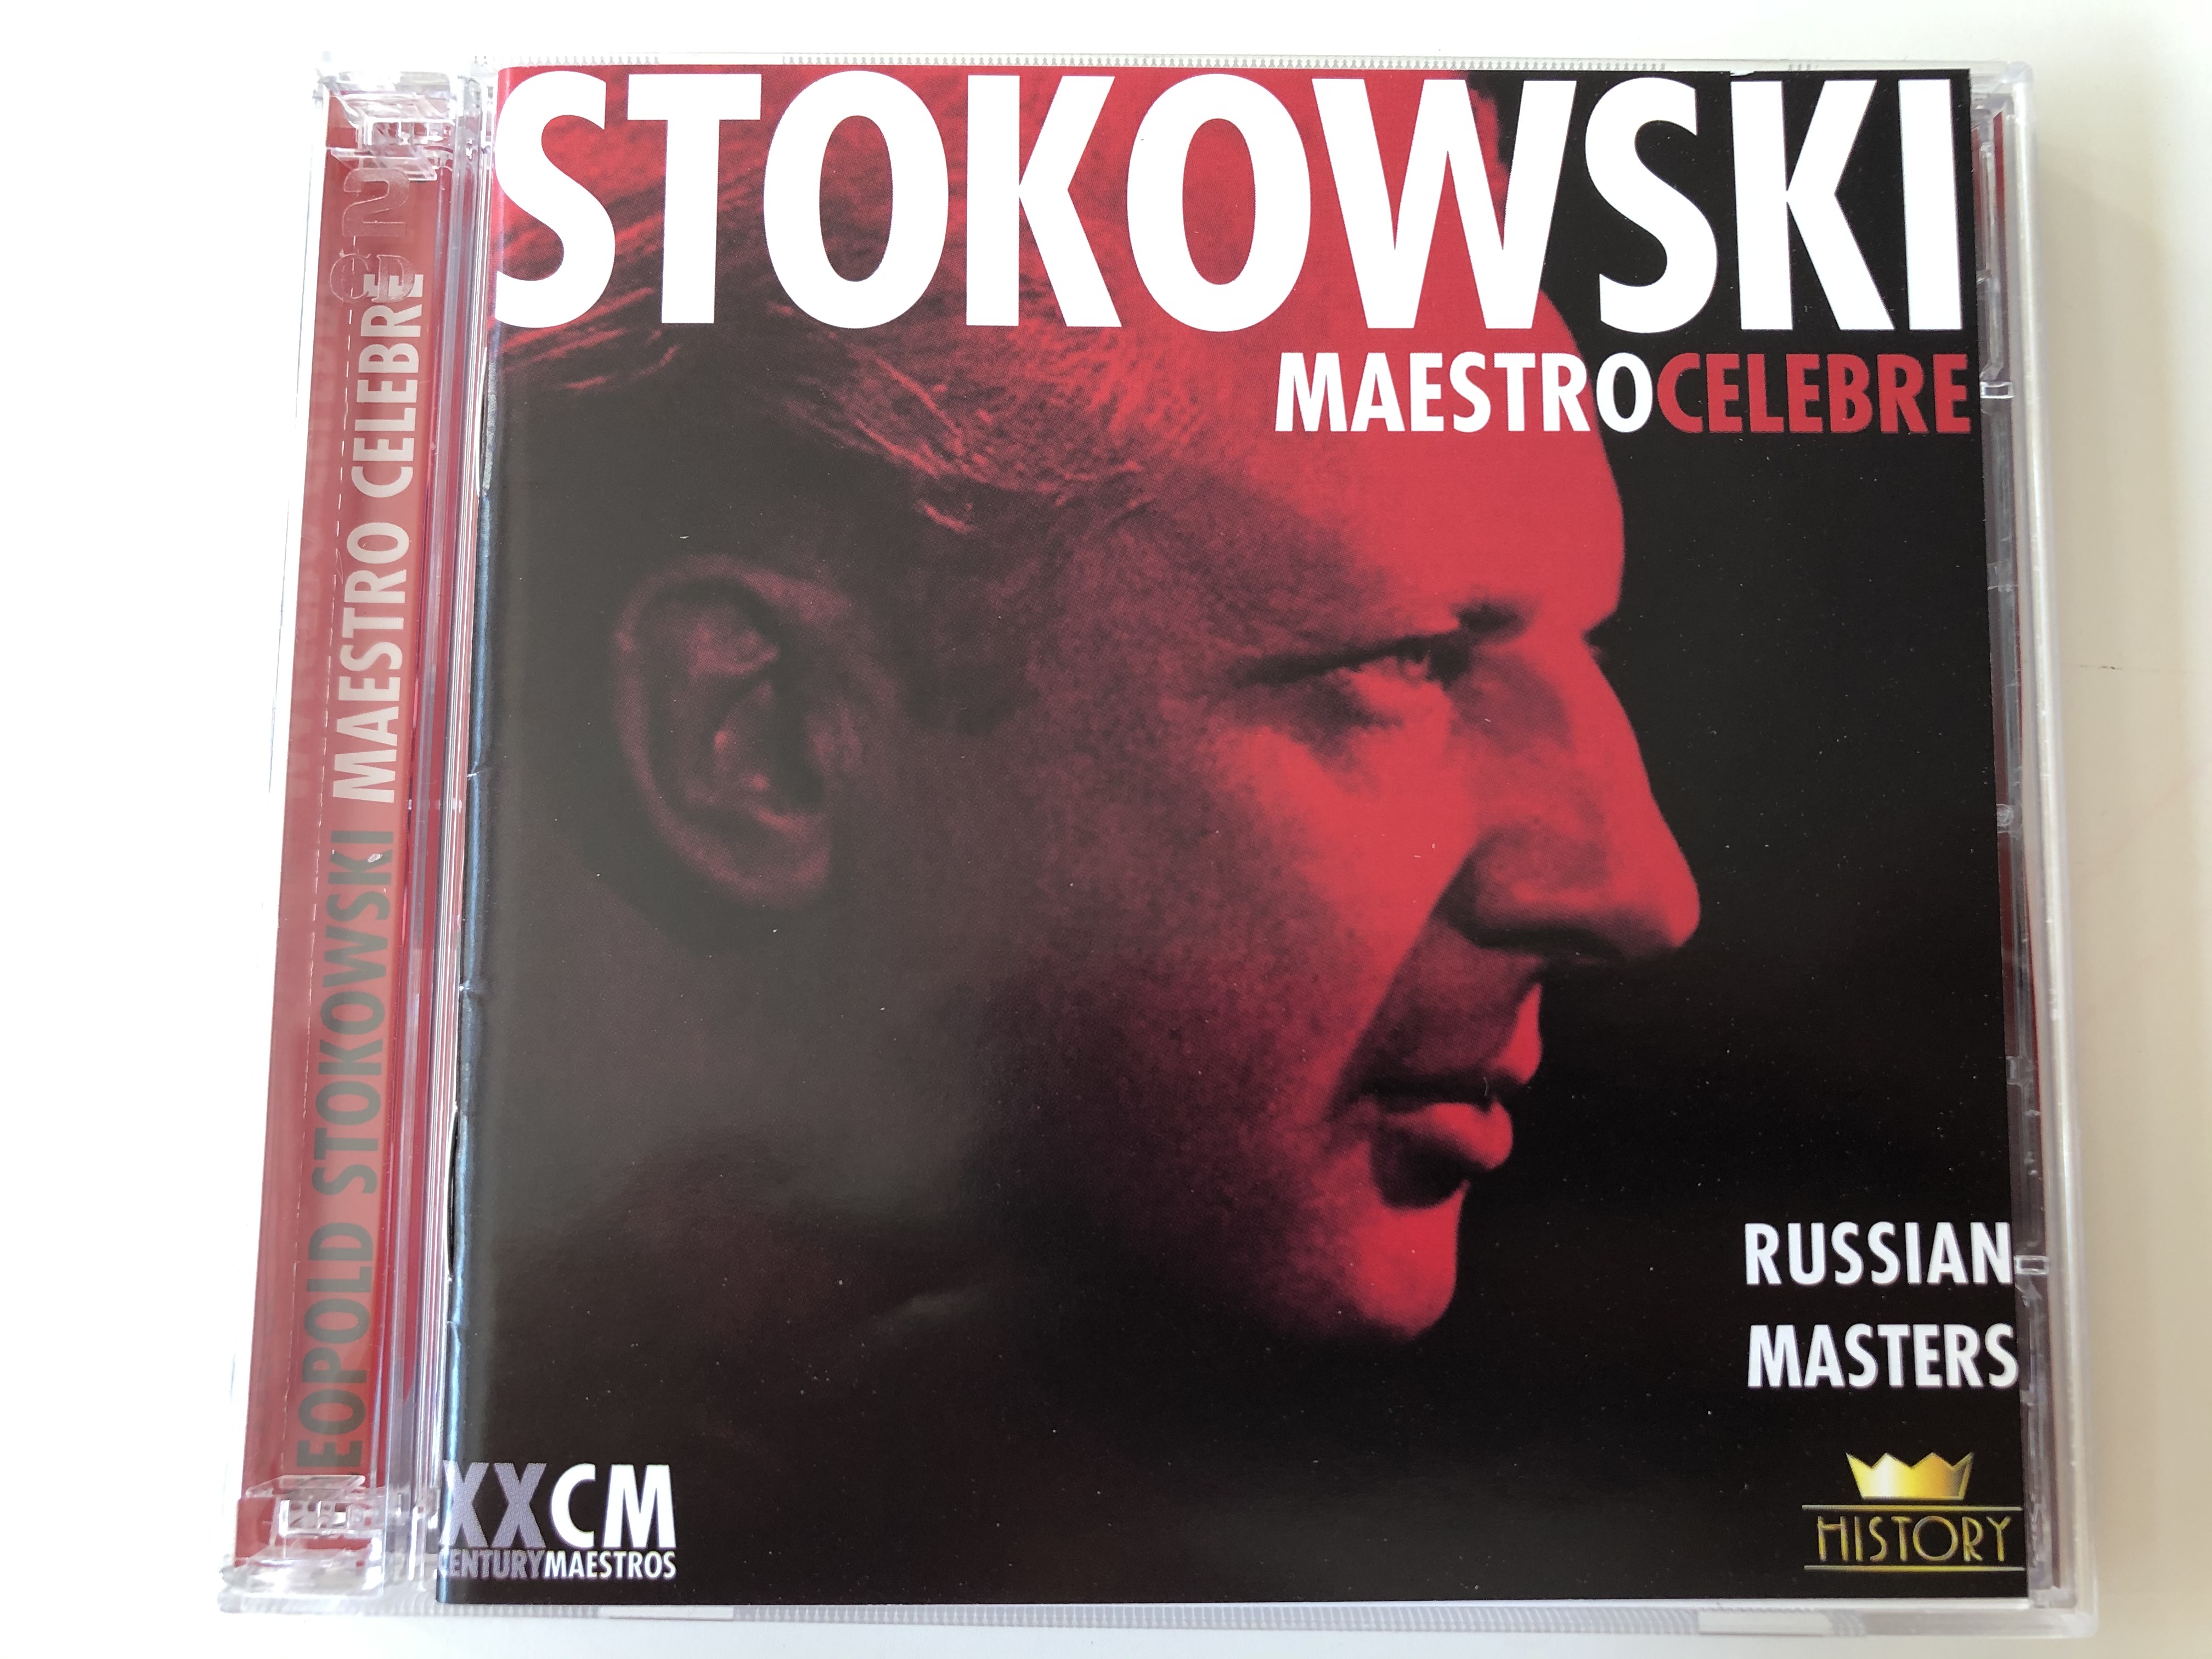 stokowski-maestro-celebre-russian-masters-history-2x-audio-cd-2001-203293-303-1-.jpg